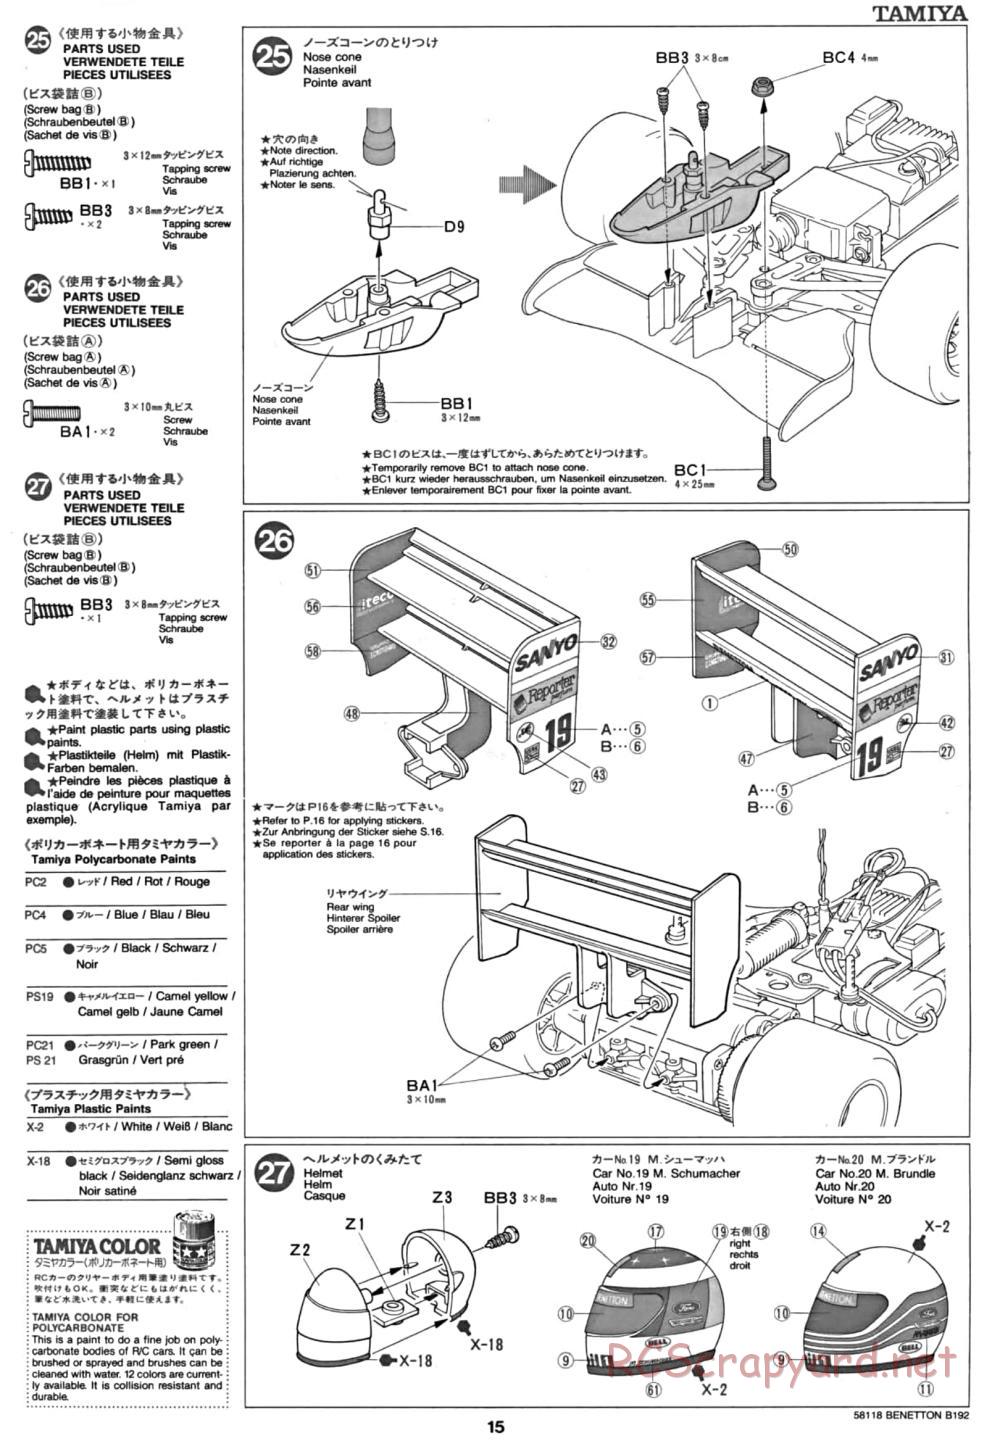 Tamiya - Benetton B192 - F102 Chassis - Manual - Page 15